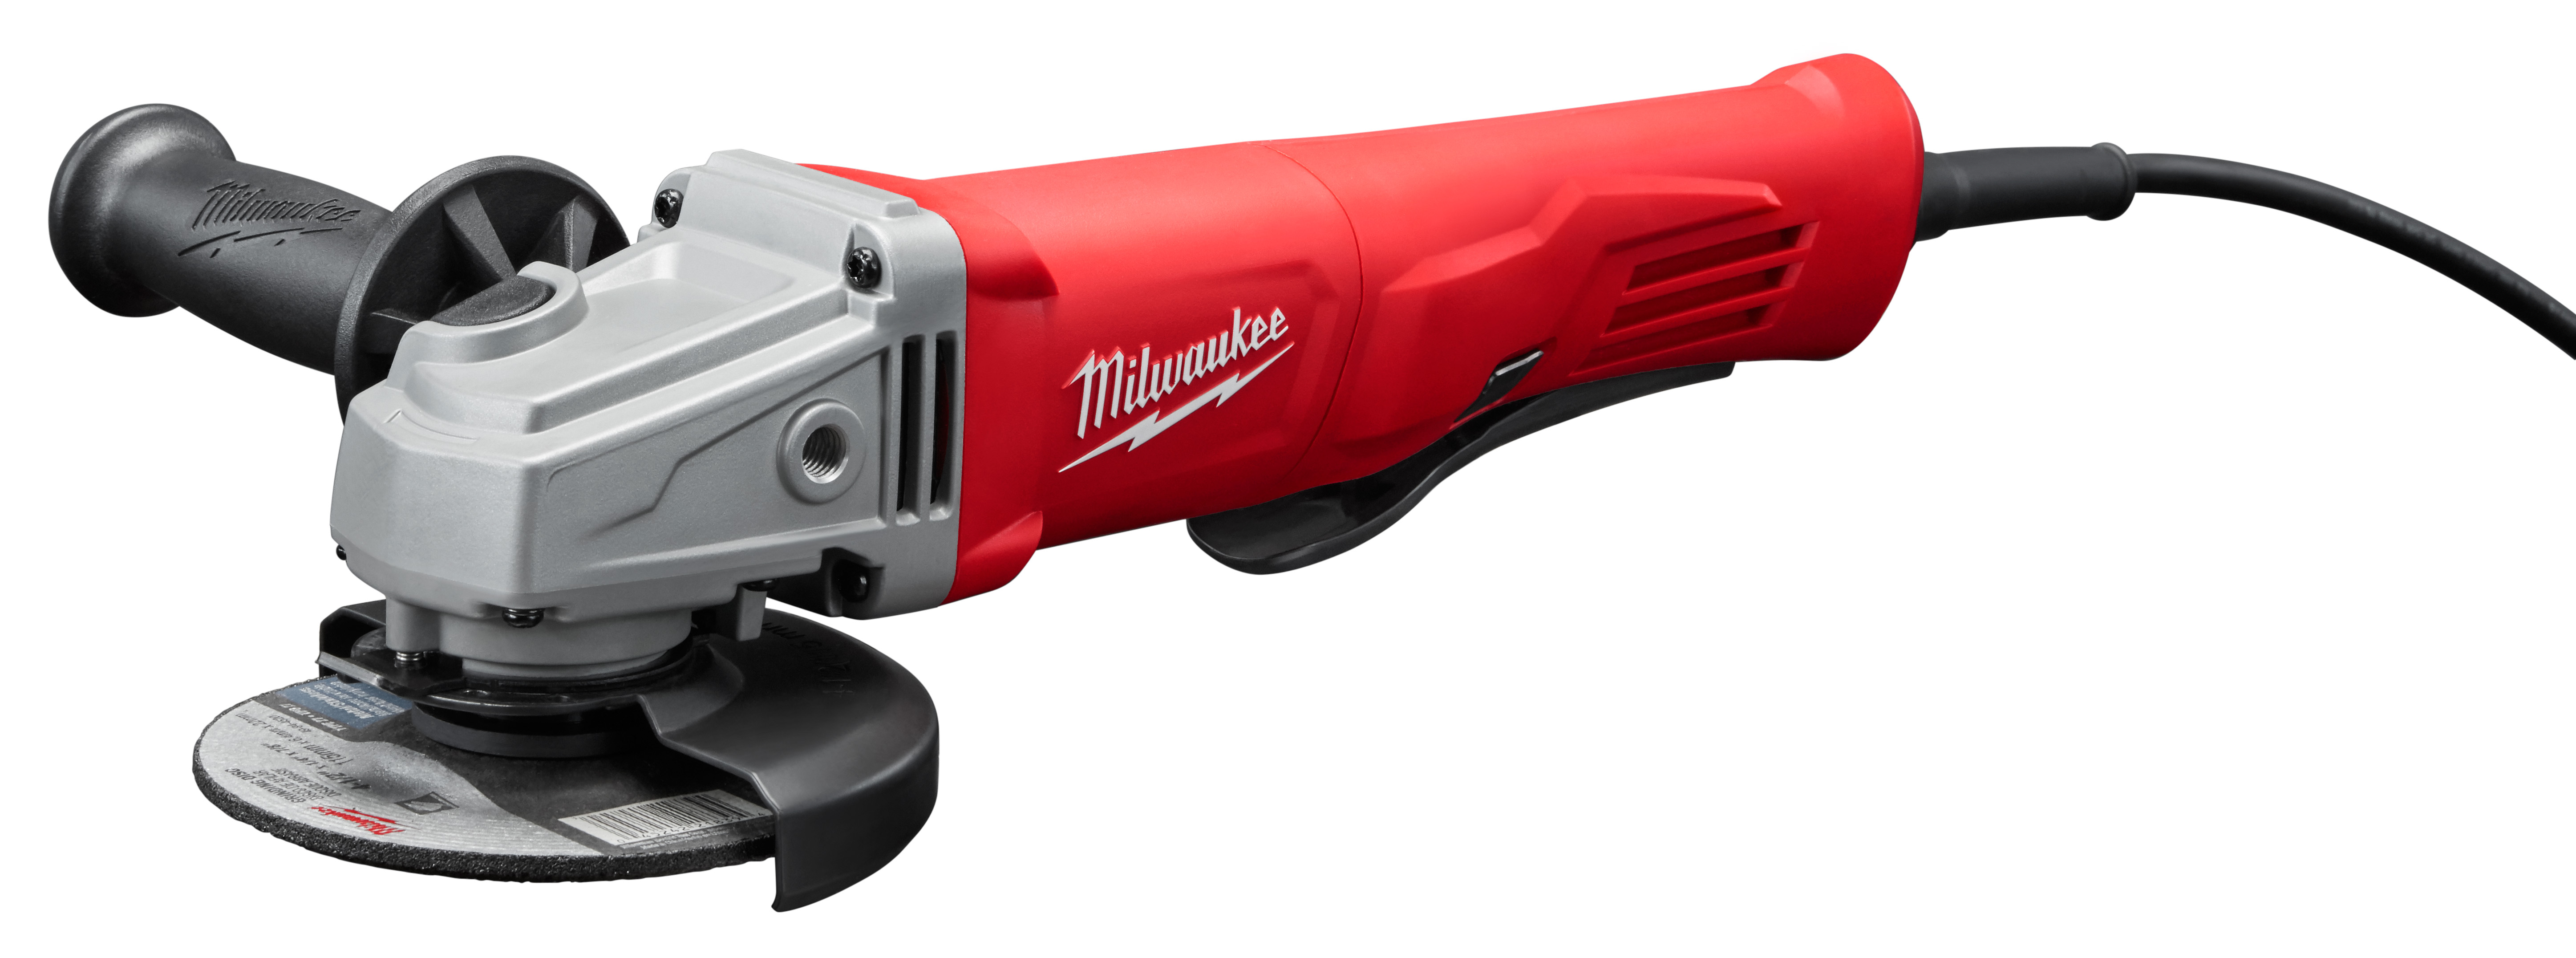 Milwaukee® 6142-31 No-Lock Corded Small Angle Grinder, 4-1/2 in Dia Wheel, 5/8-11 Arbor/Shank, 120 VAC, Black/Gray/Red